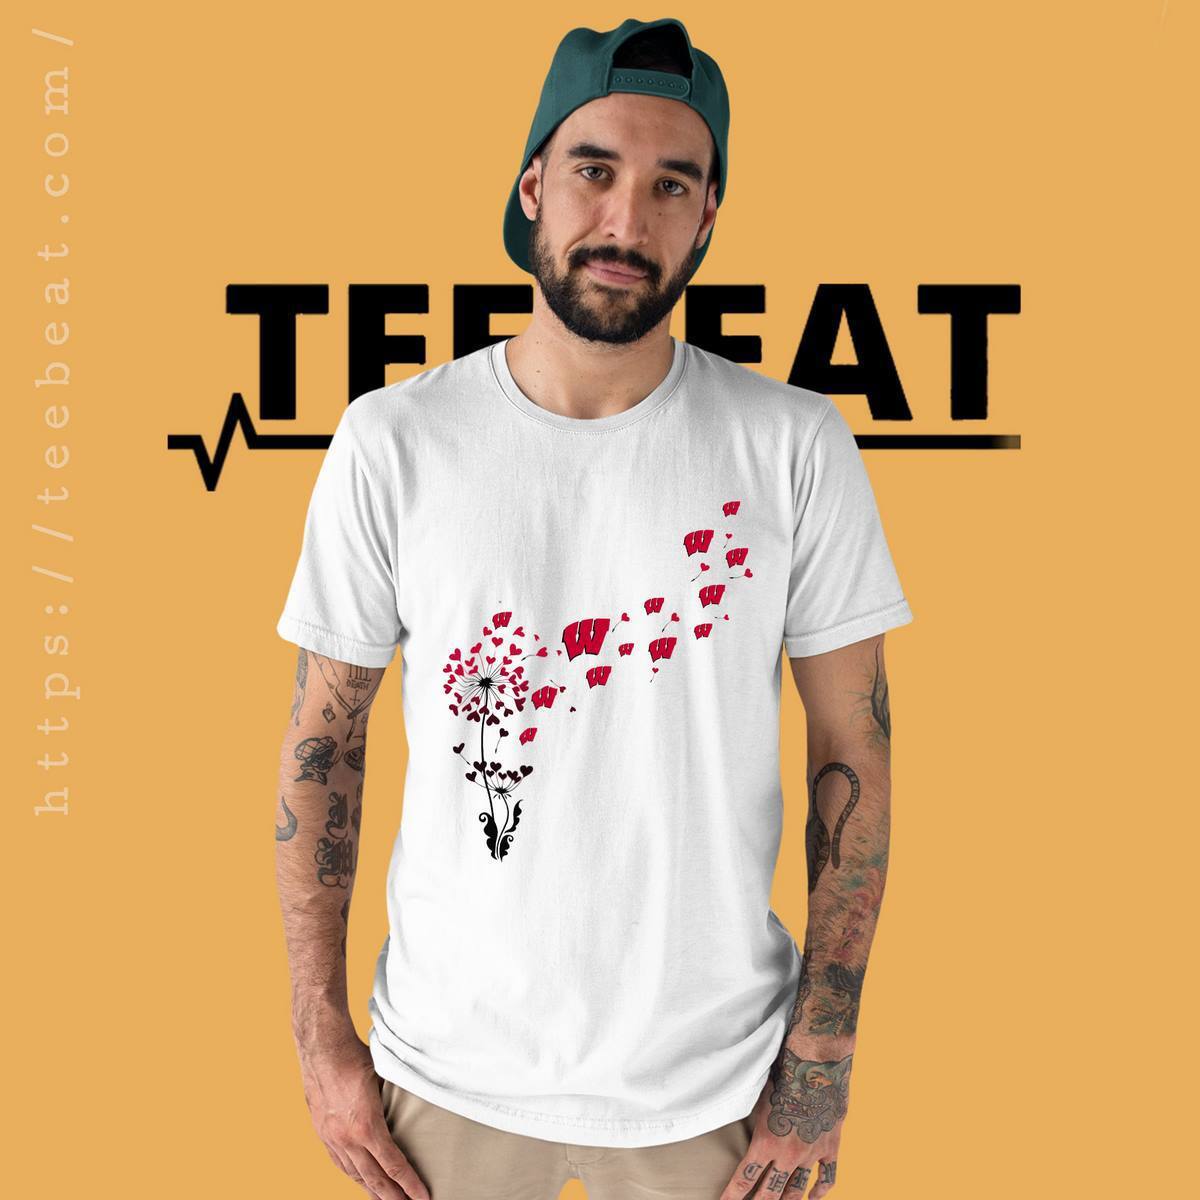 TeeBeat - Dress Your Heart, Script Your Tale.